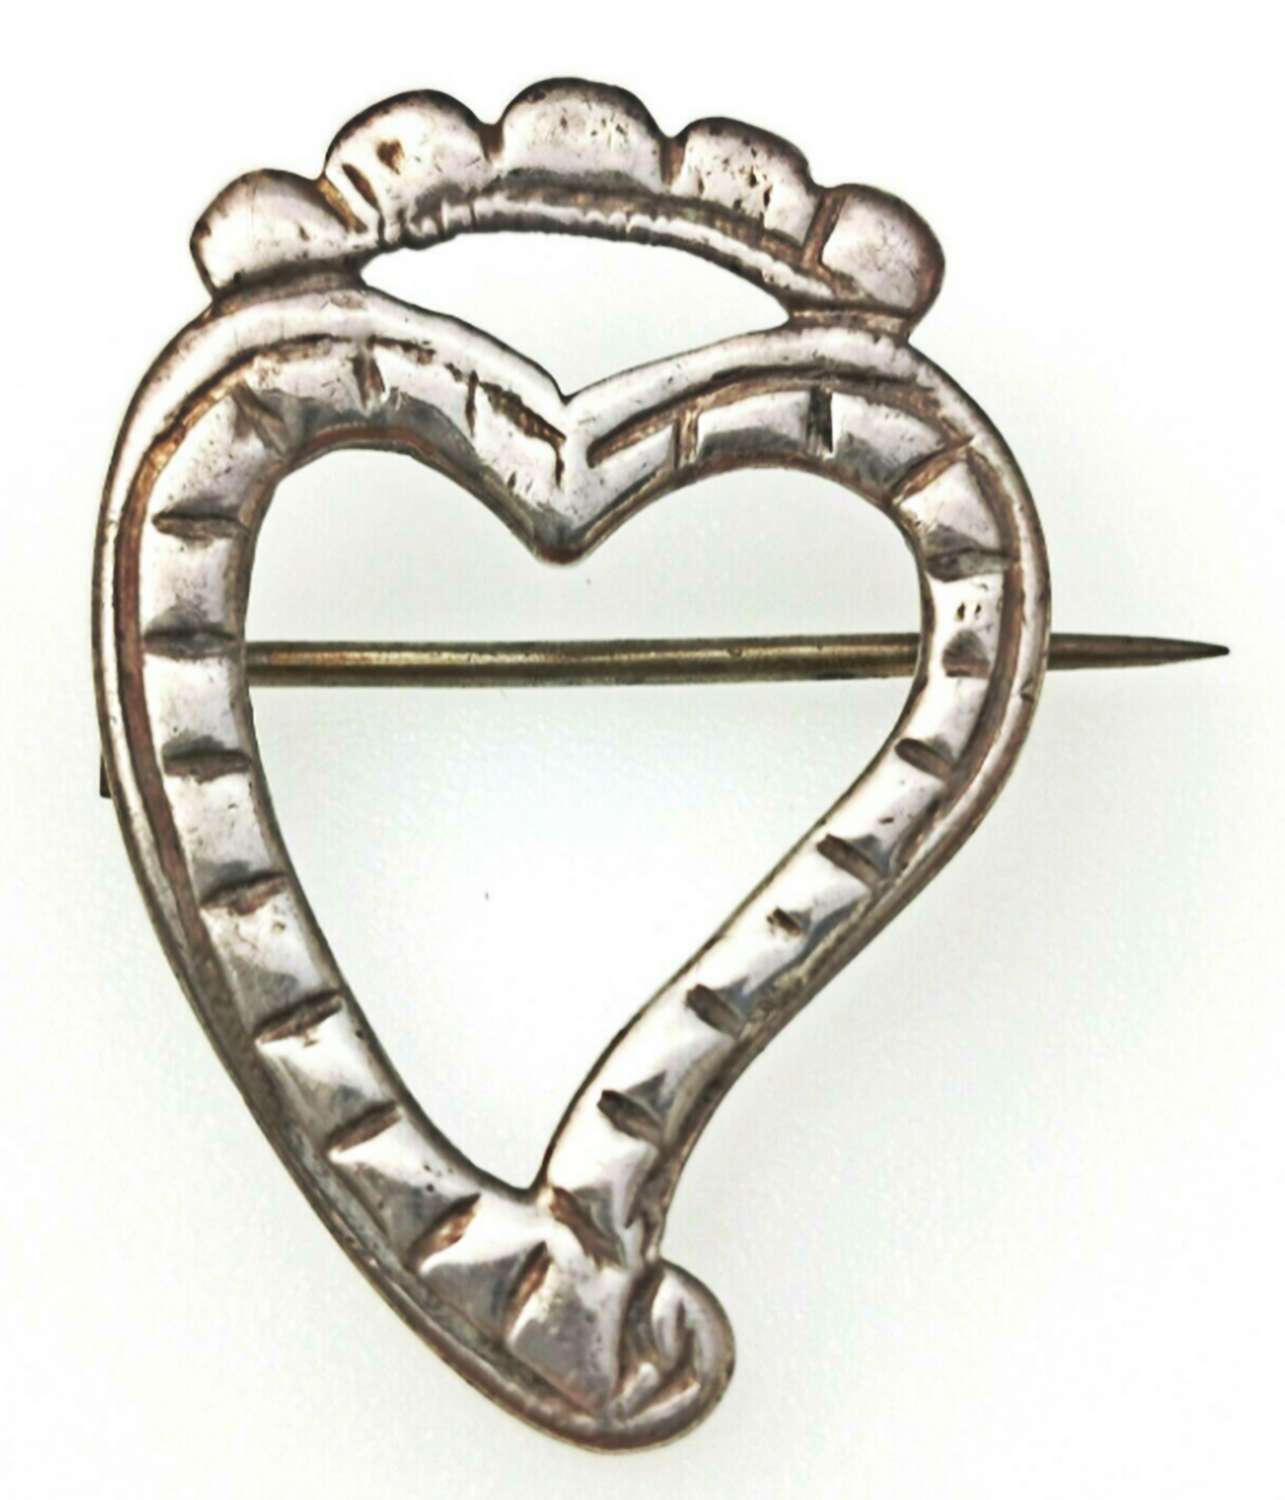 Georgian silver heart shaped brooch by Richard Hare of London